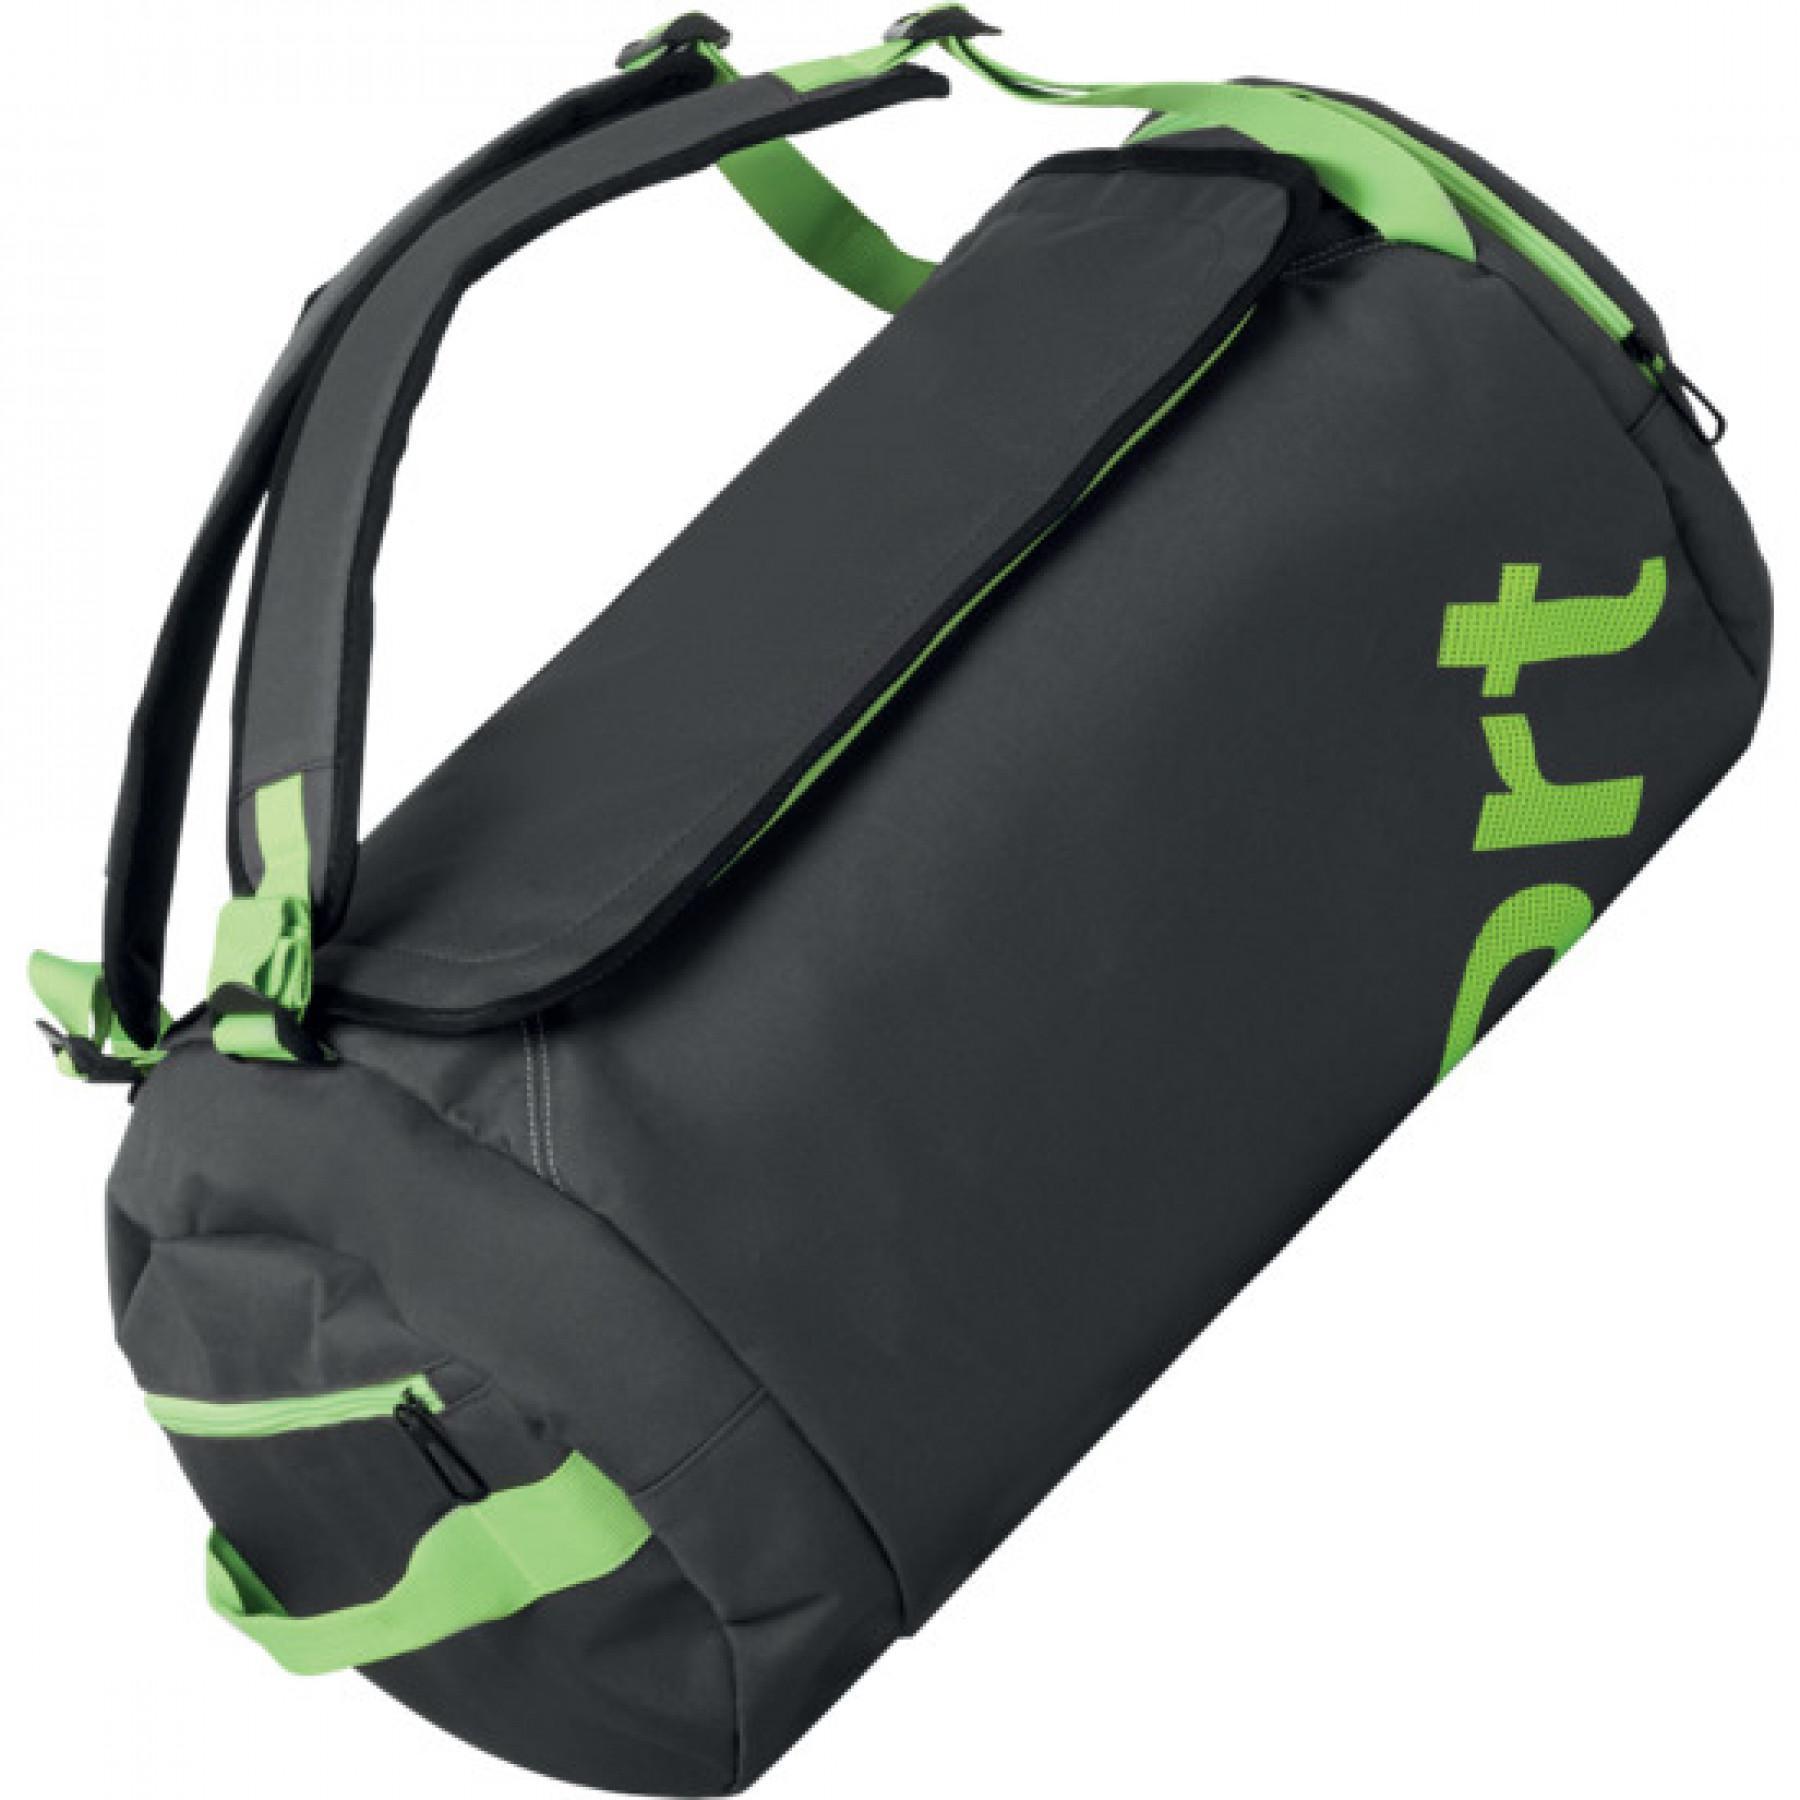 Bag Uhlsport Cape Bag - Sport bags - Bags - Equipment